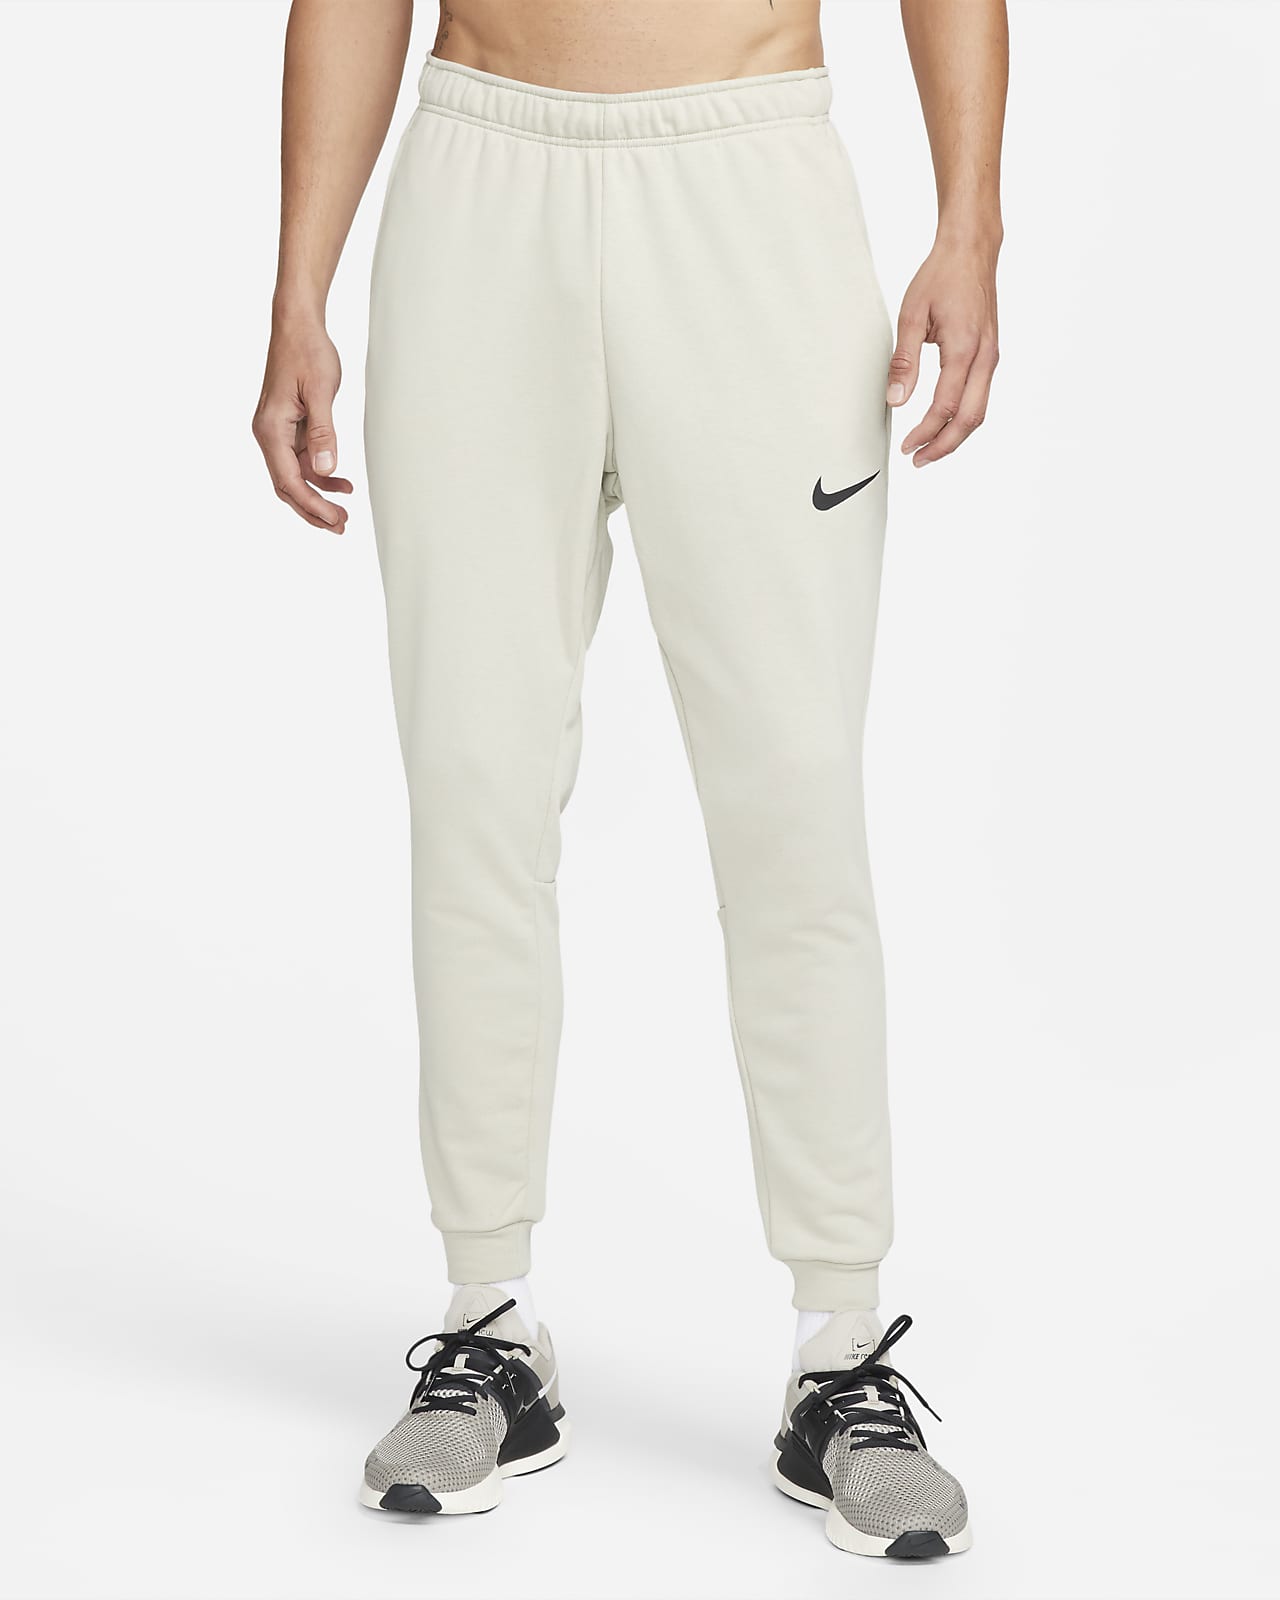 Nike Dri-FIT Men's Tapered Training Trousers